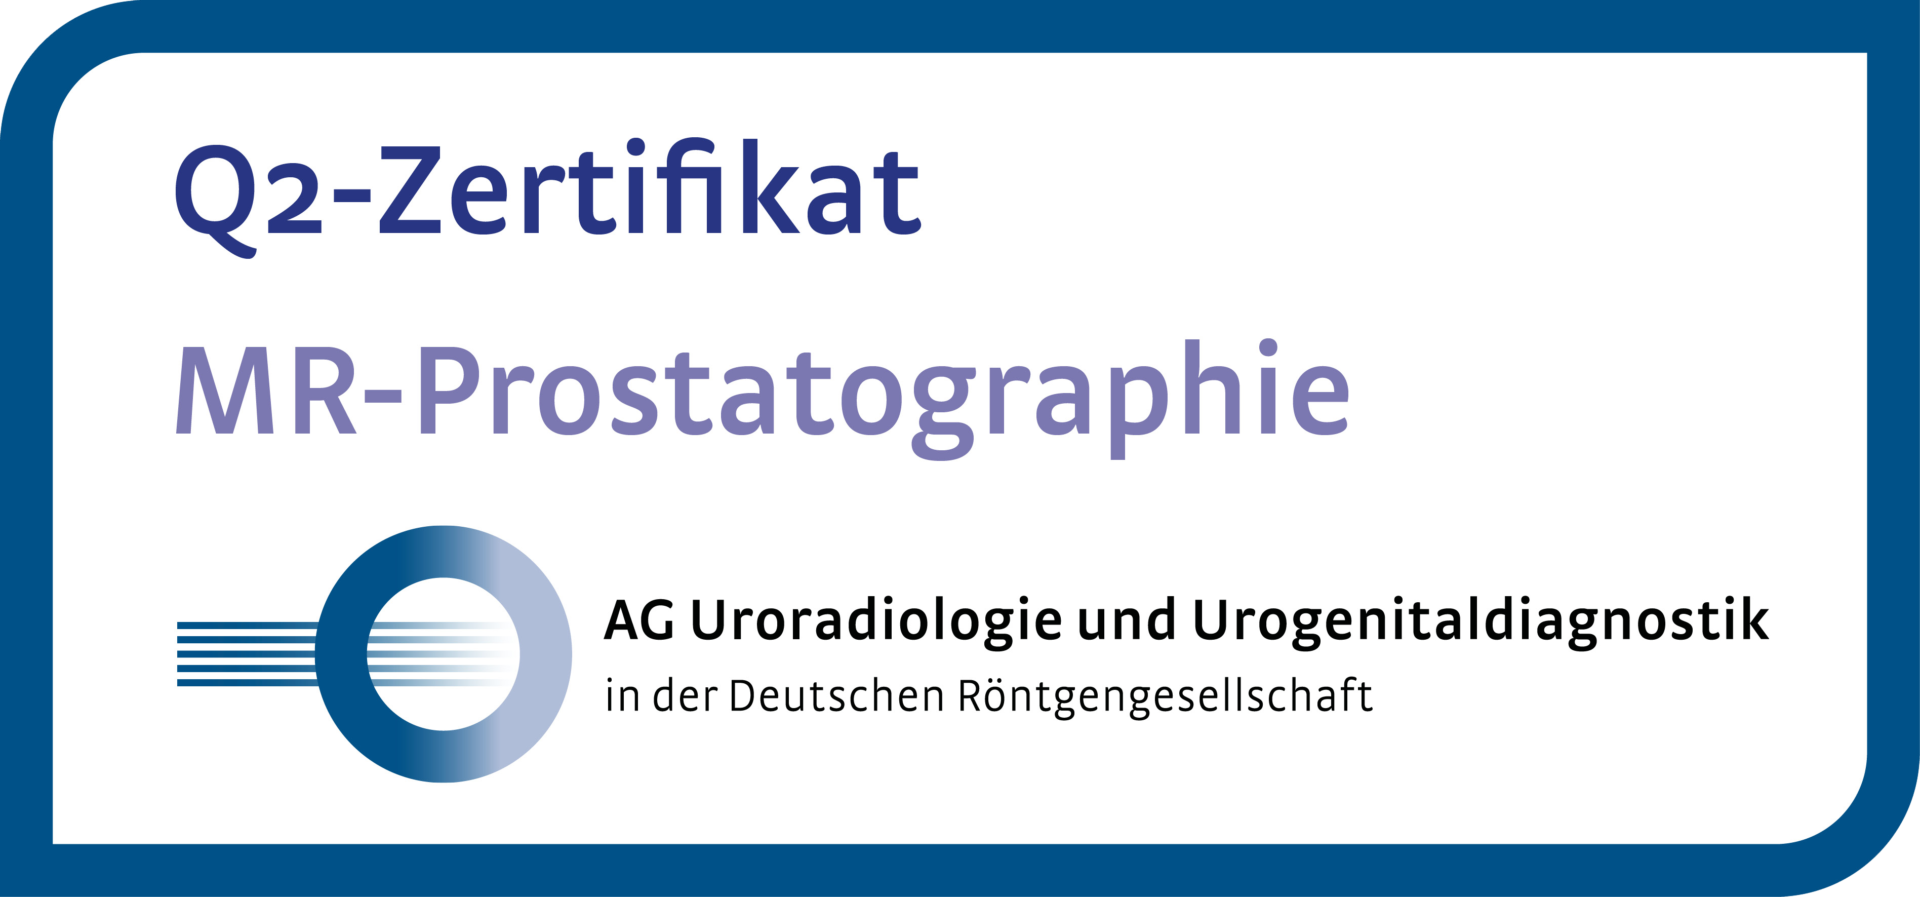 Q2-Zertifikat der Deutschen Röntgengesellschaft